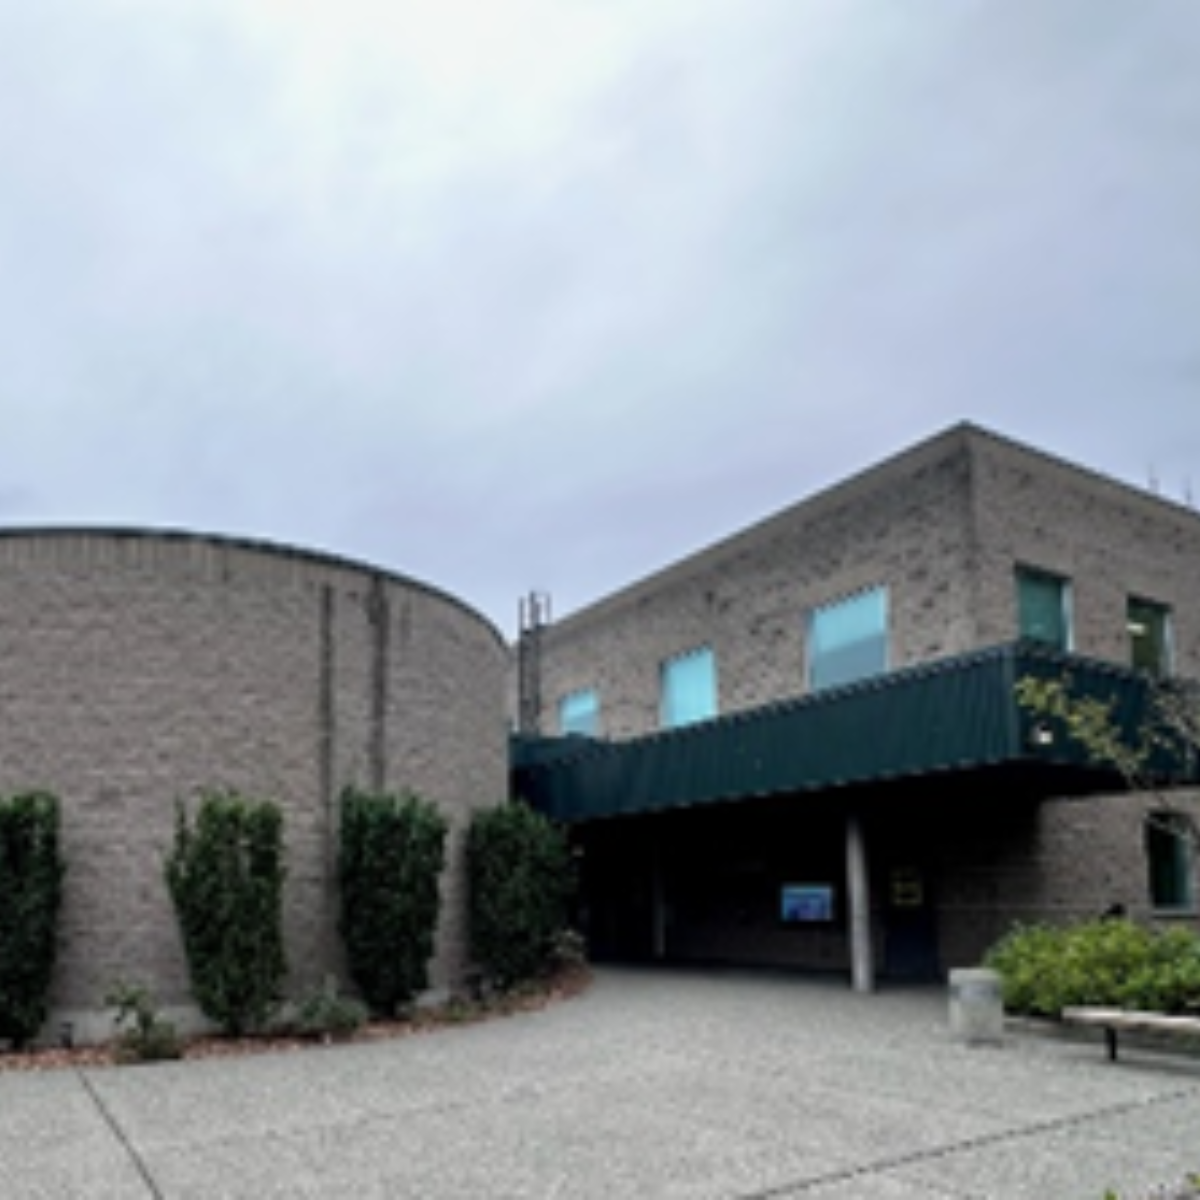 Image of Edmonds School in Washington